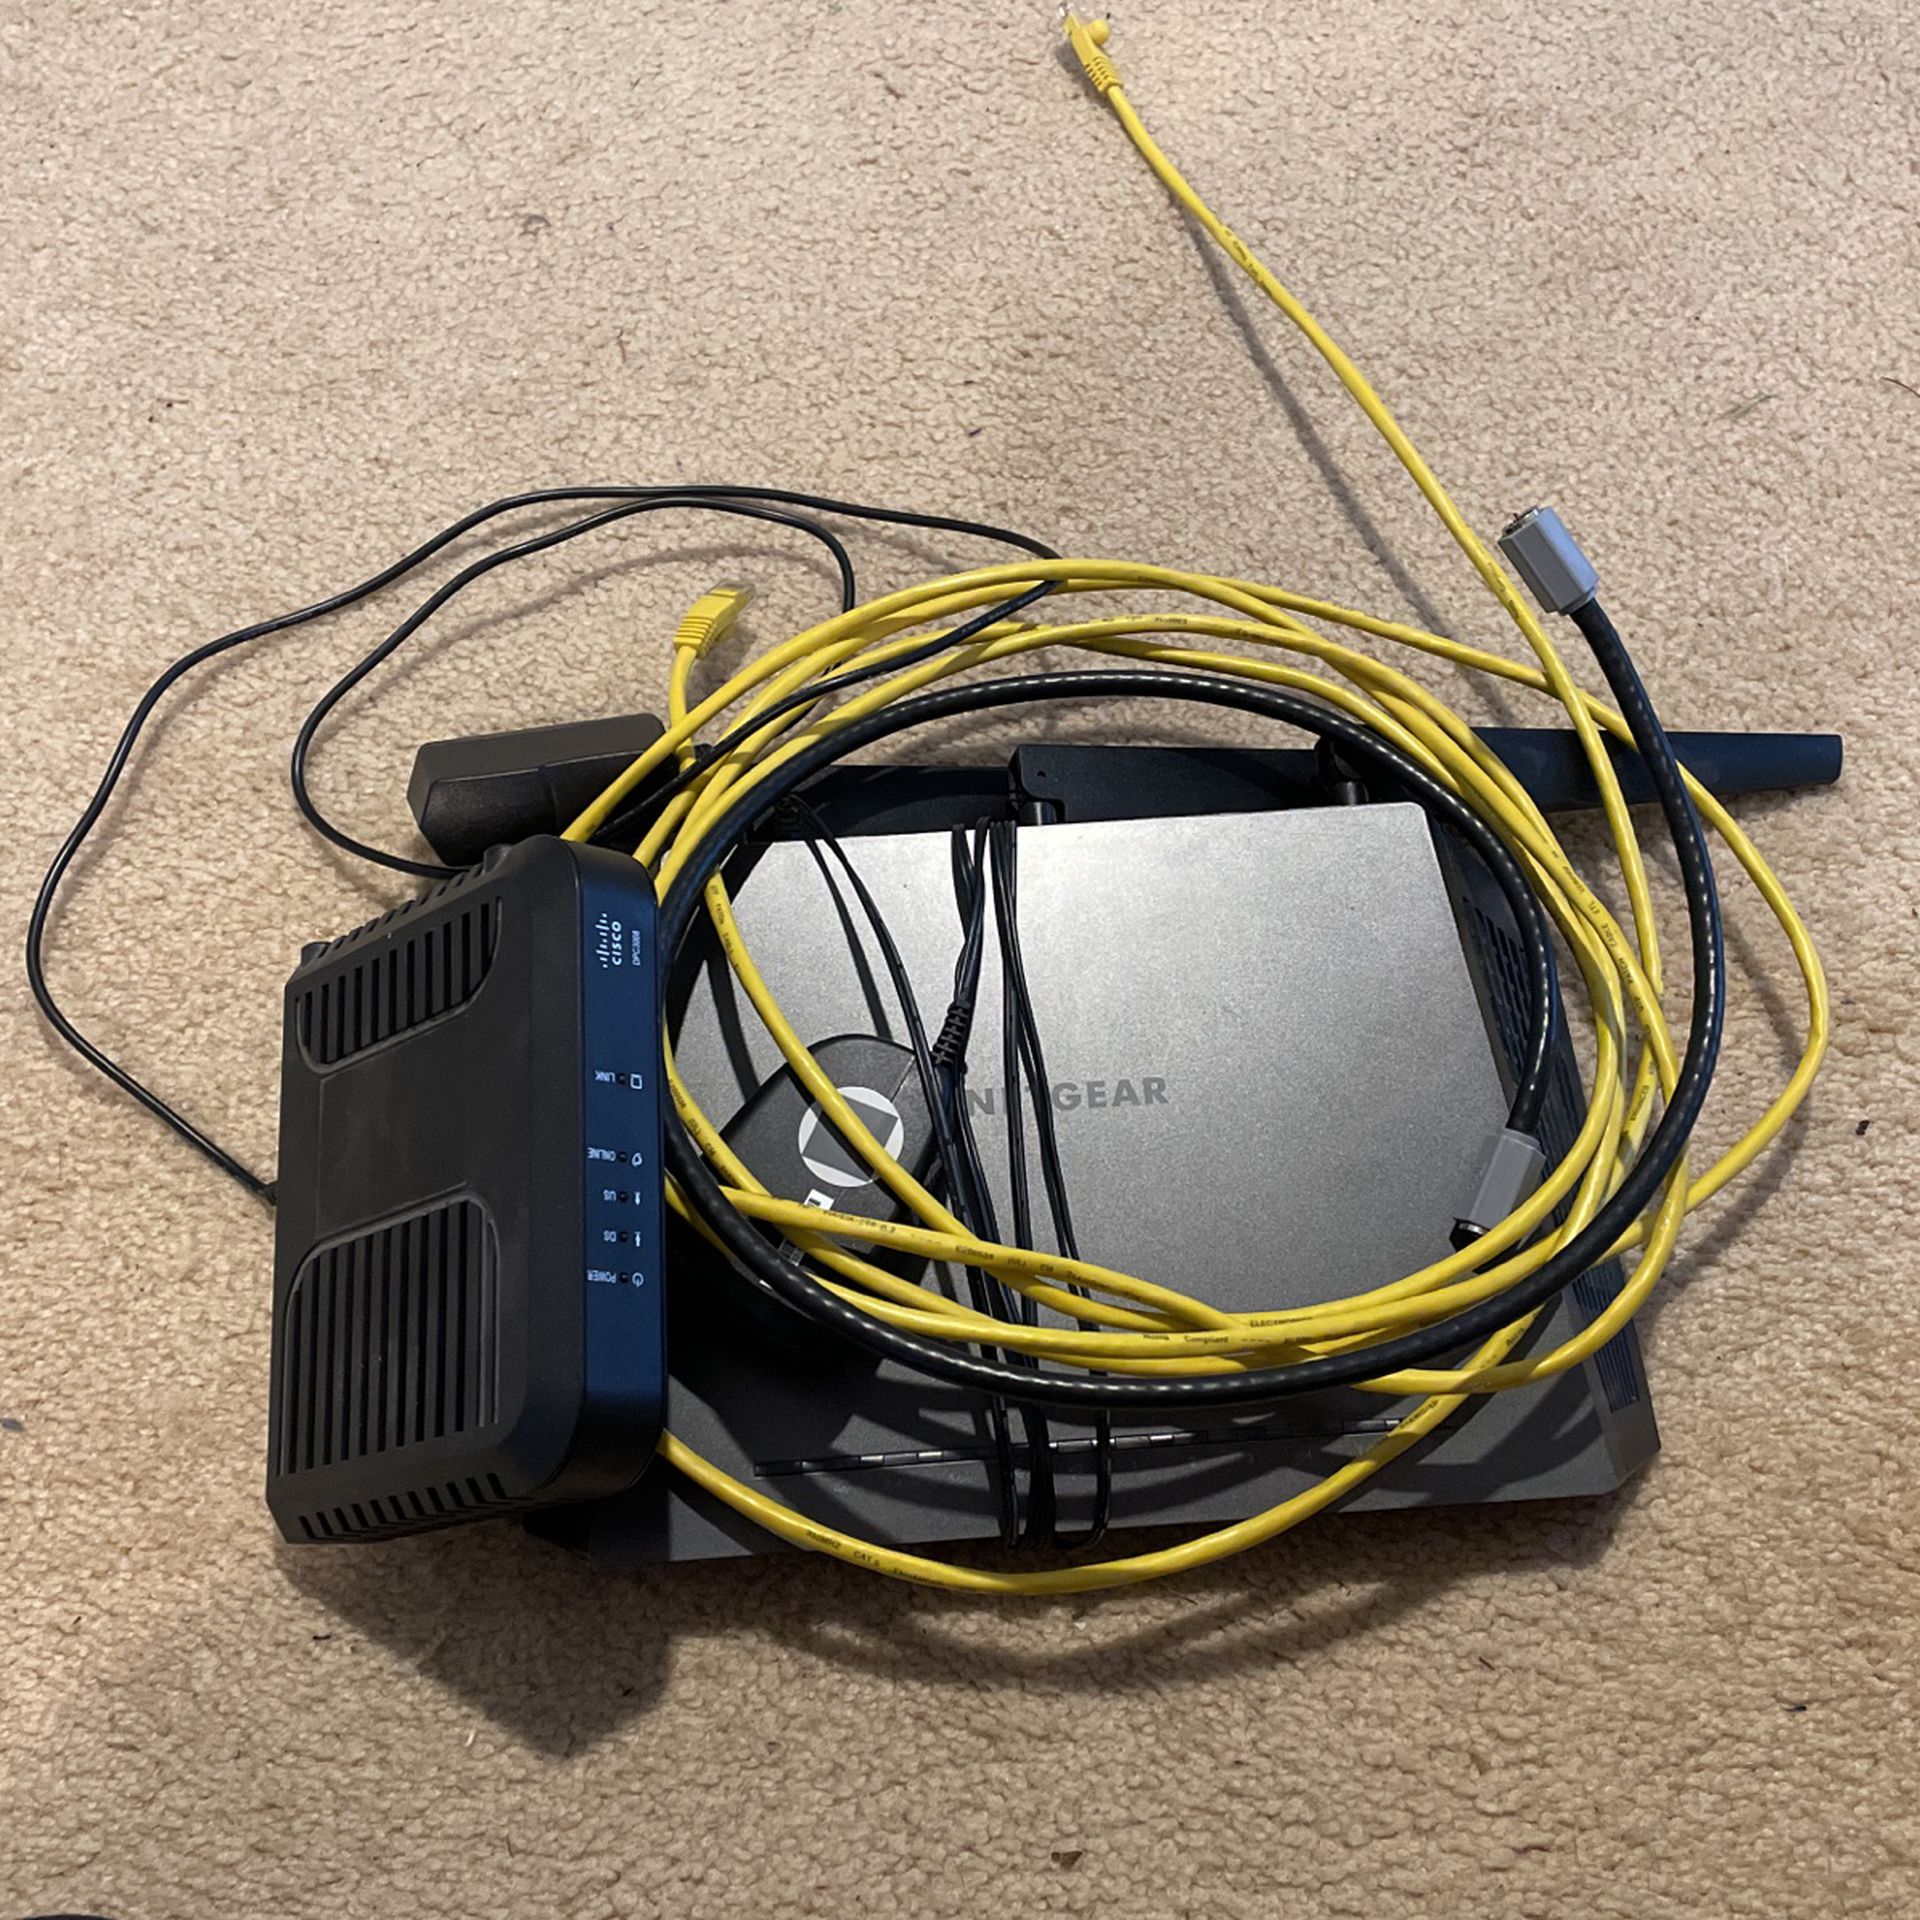 Cisco DPC3008 Modem & Netgear Nighthawk AC1900 WI-FI Router